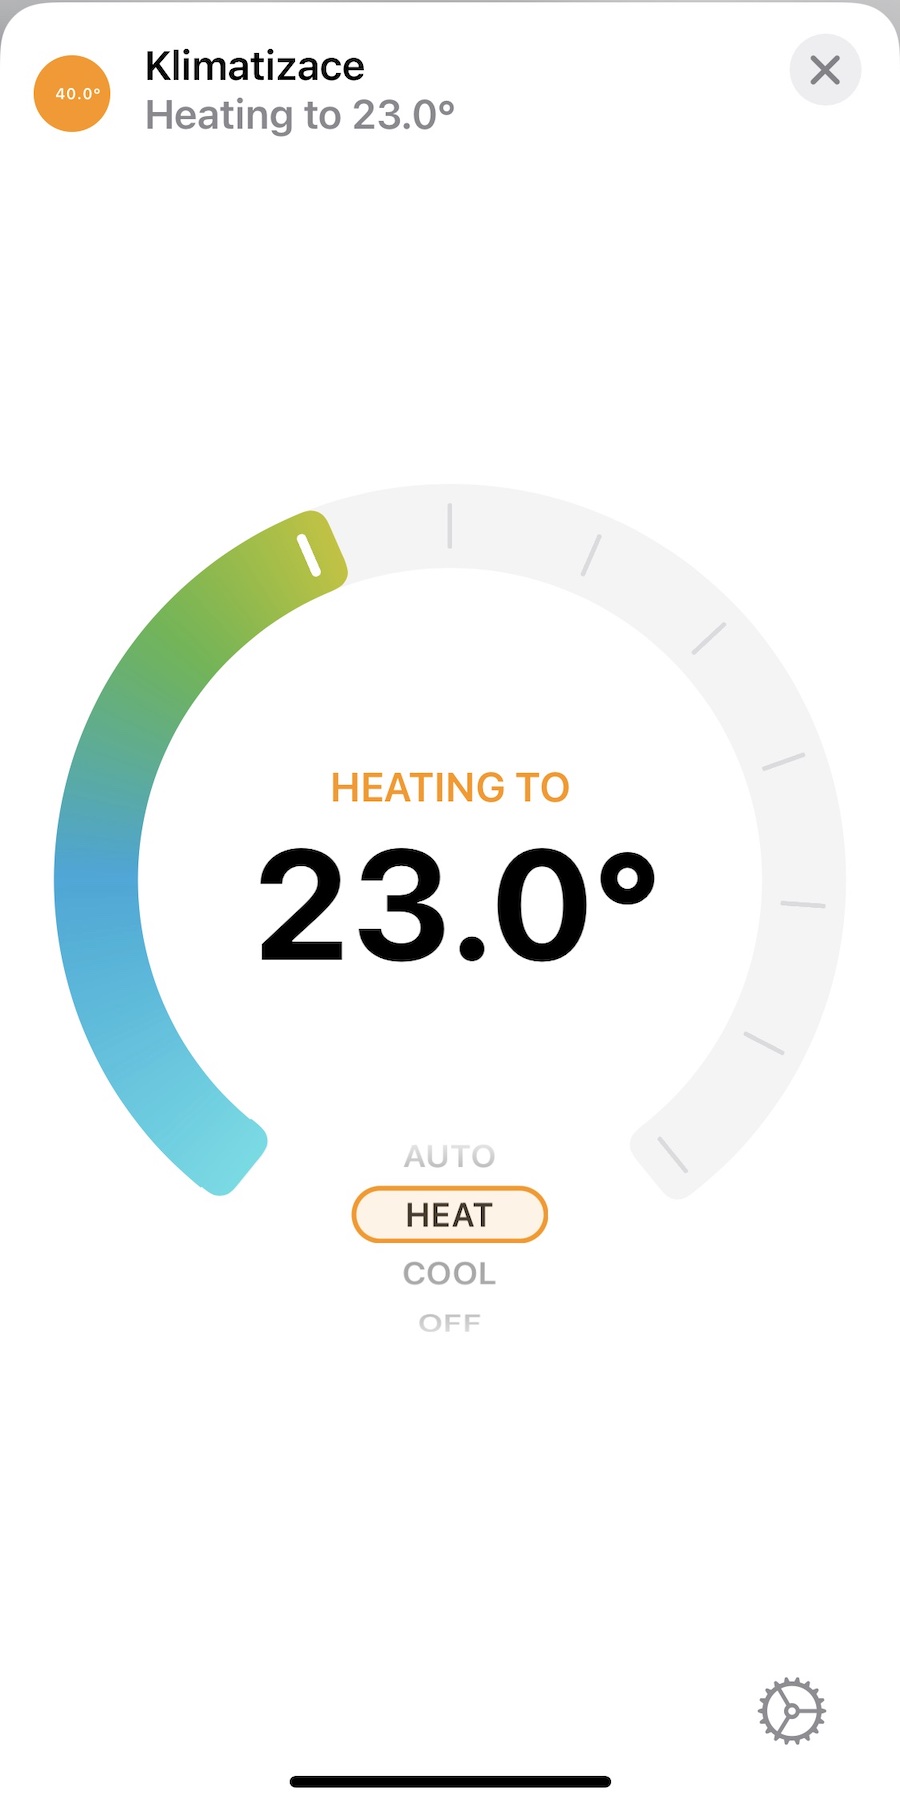 Heating and temperature regulation